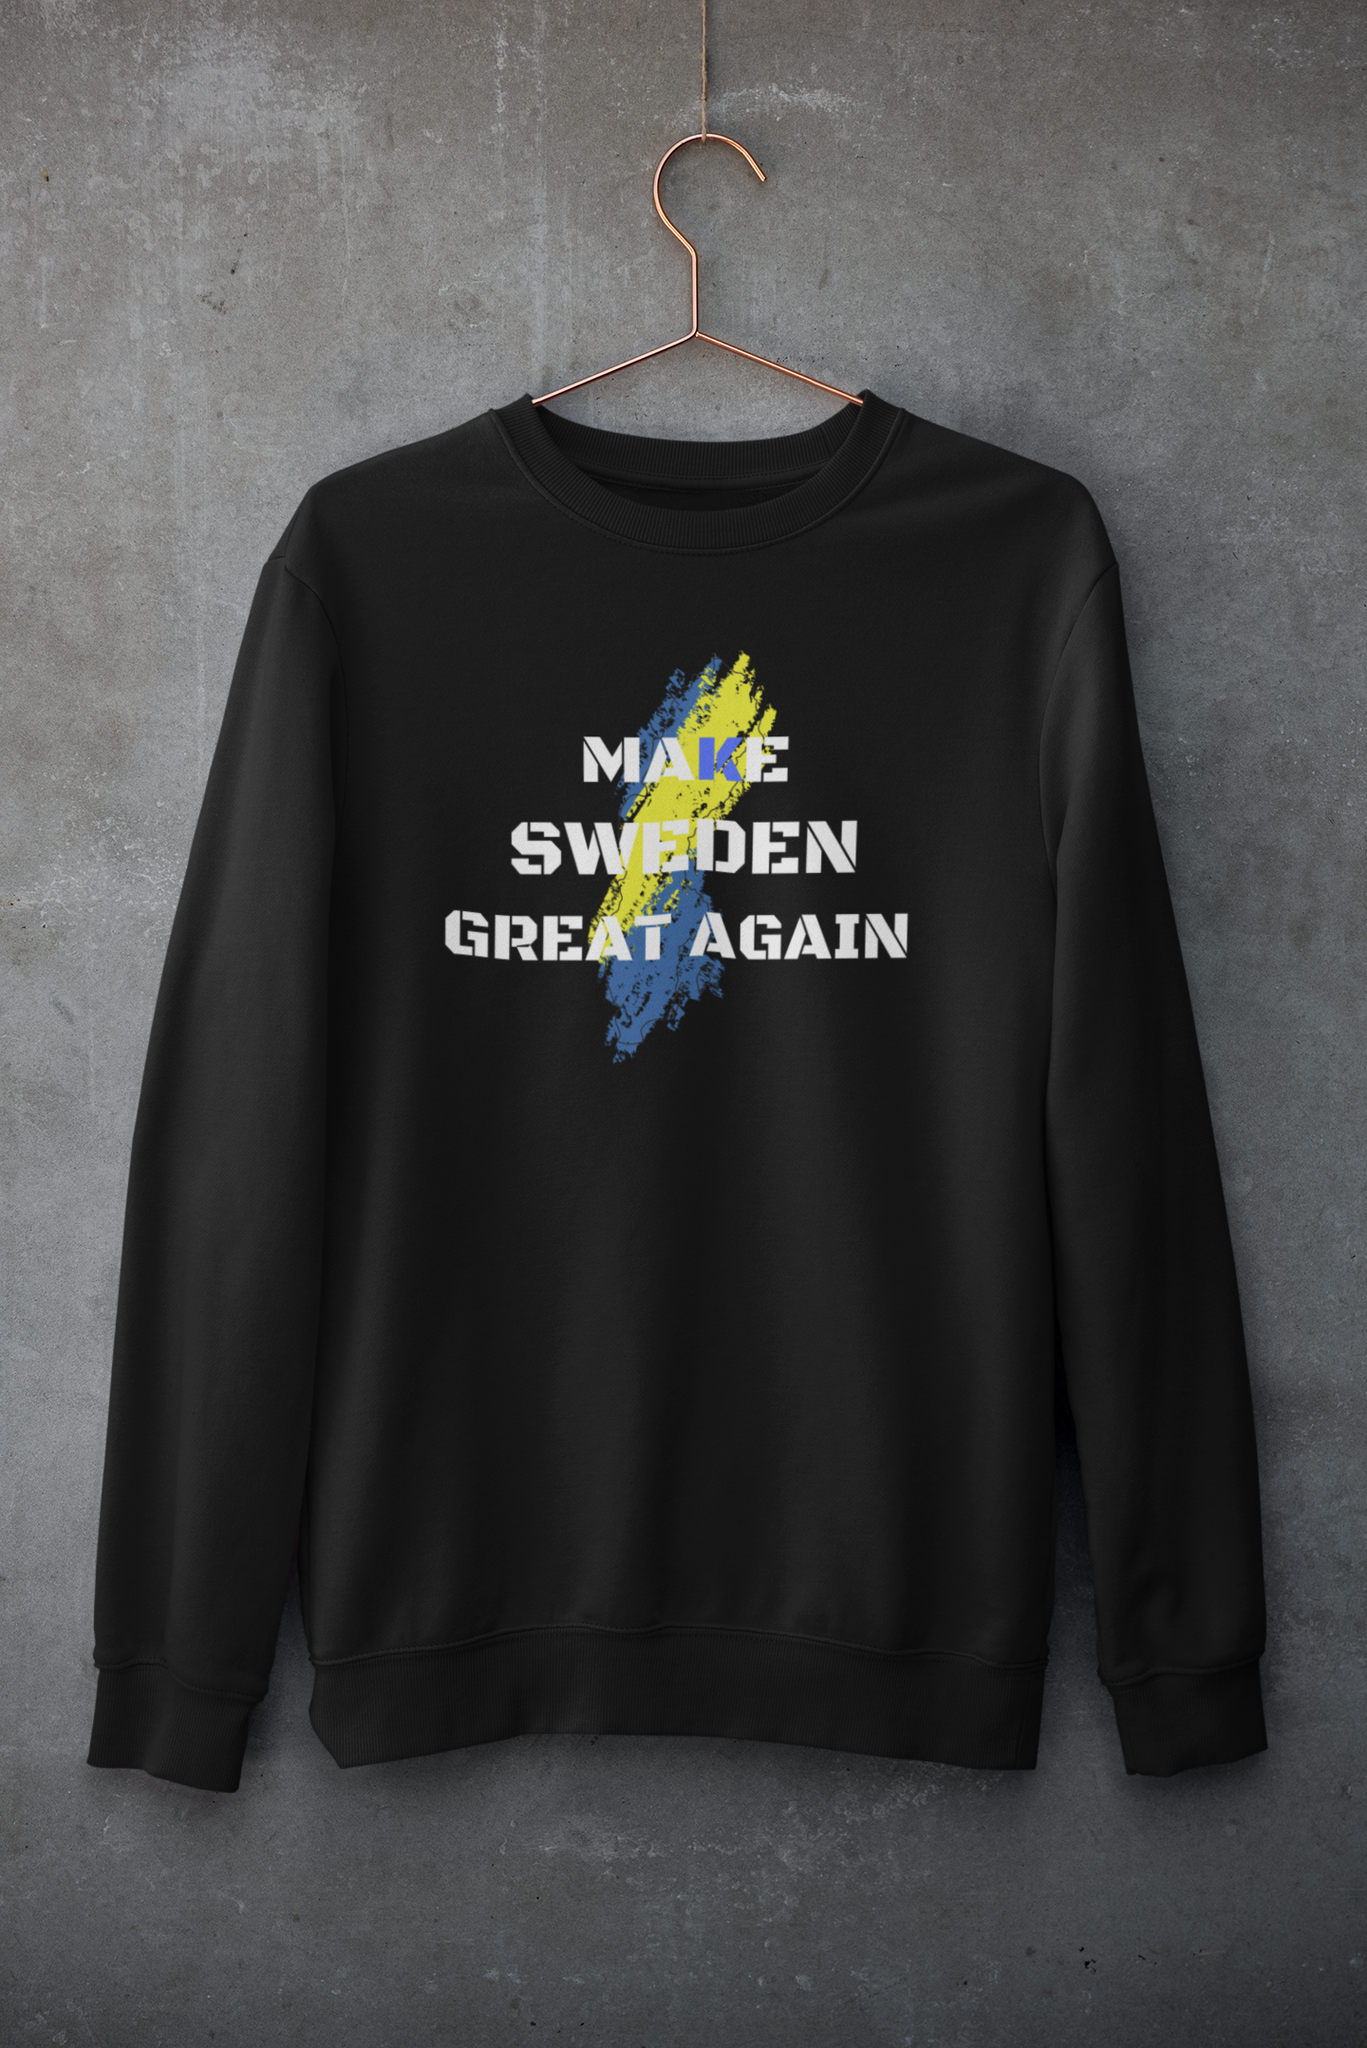 Make Sweden Great Again Sweatshirt Unisex